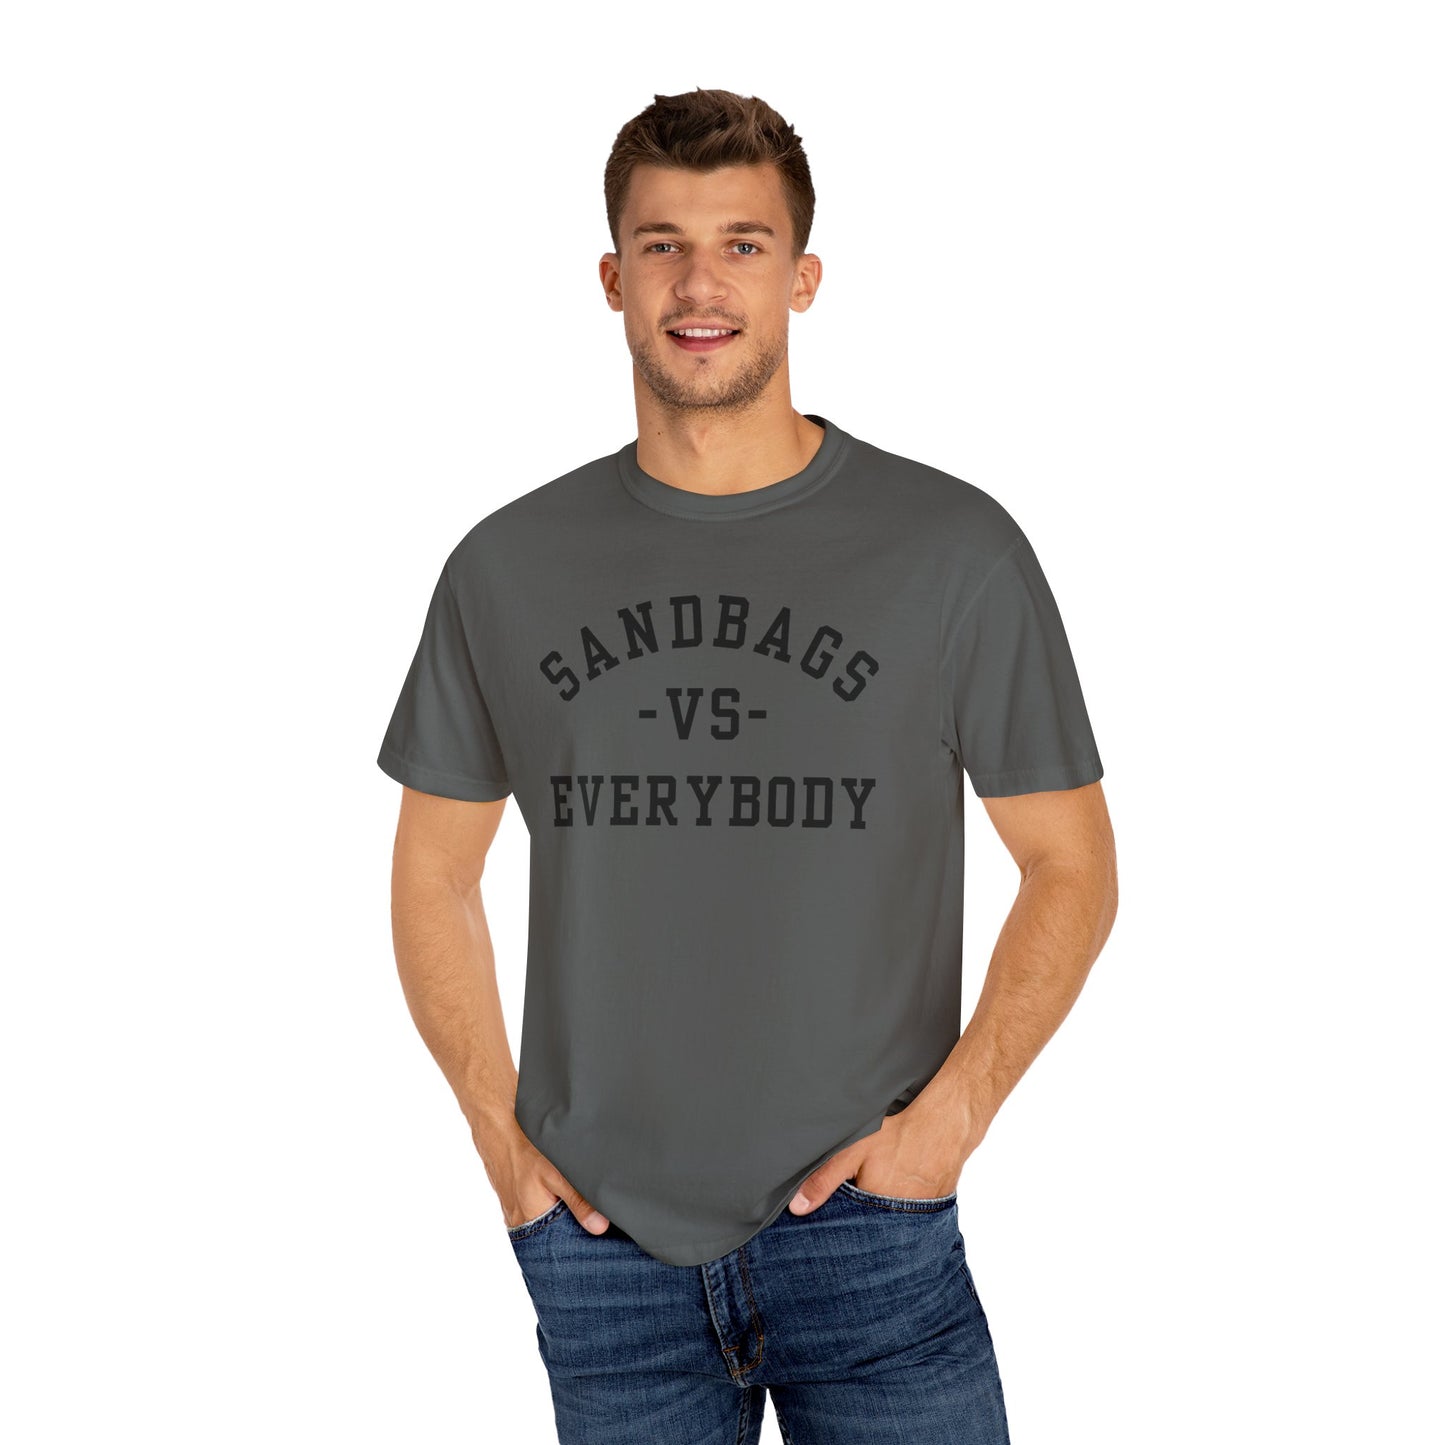 Sandbags VS Everybody - Unisex Garment-Dyed T-shirt